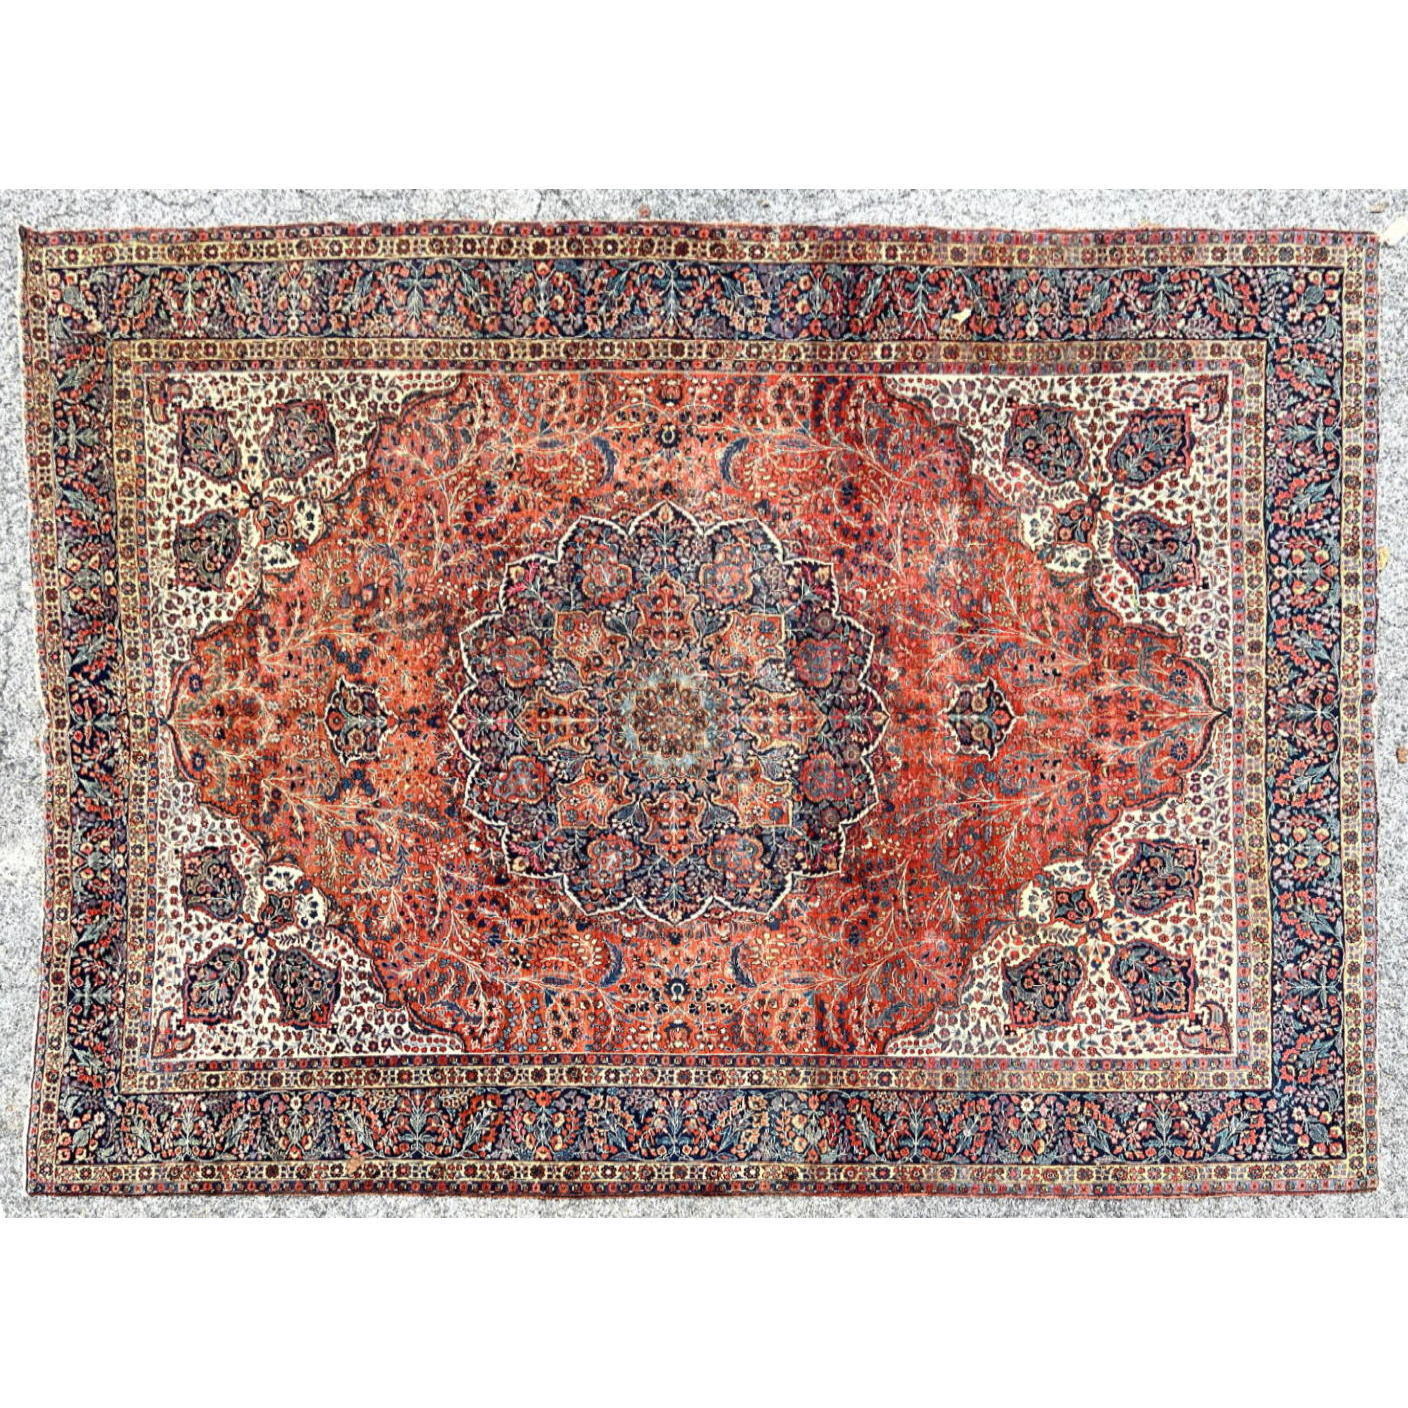 11'3 x 8 Handmade Oriental Carpet